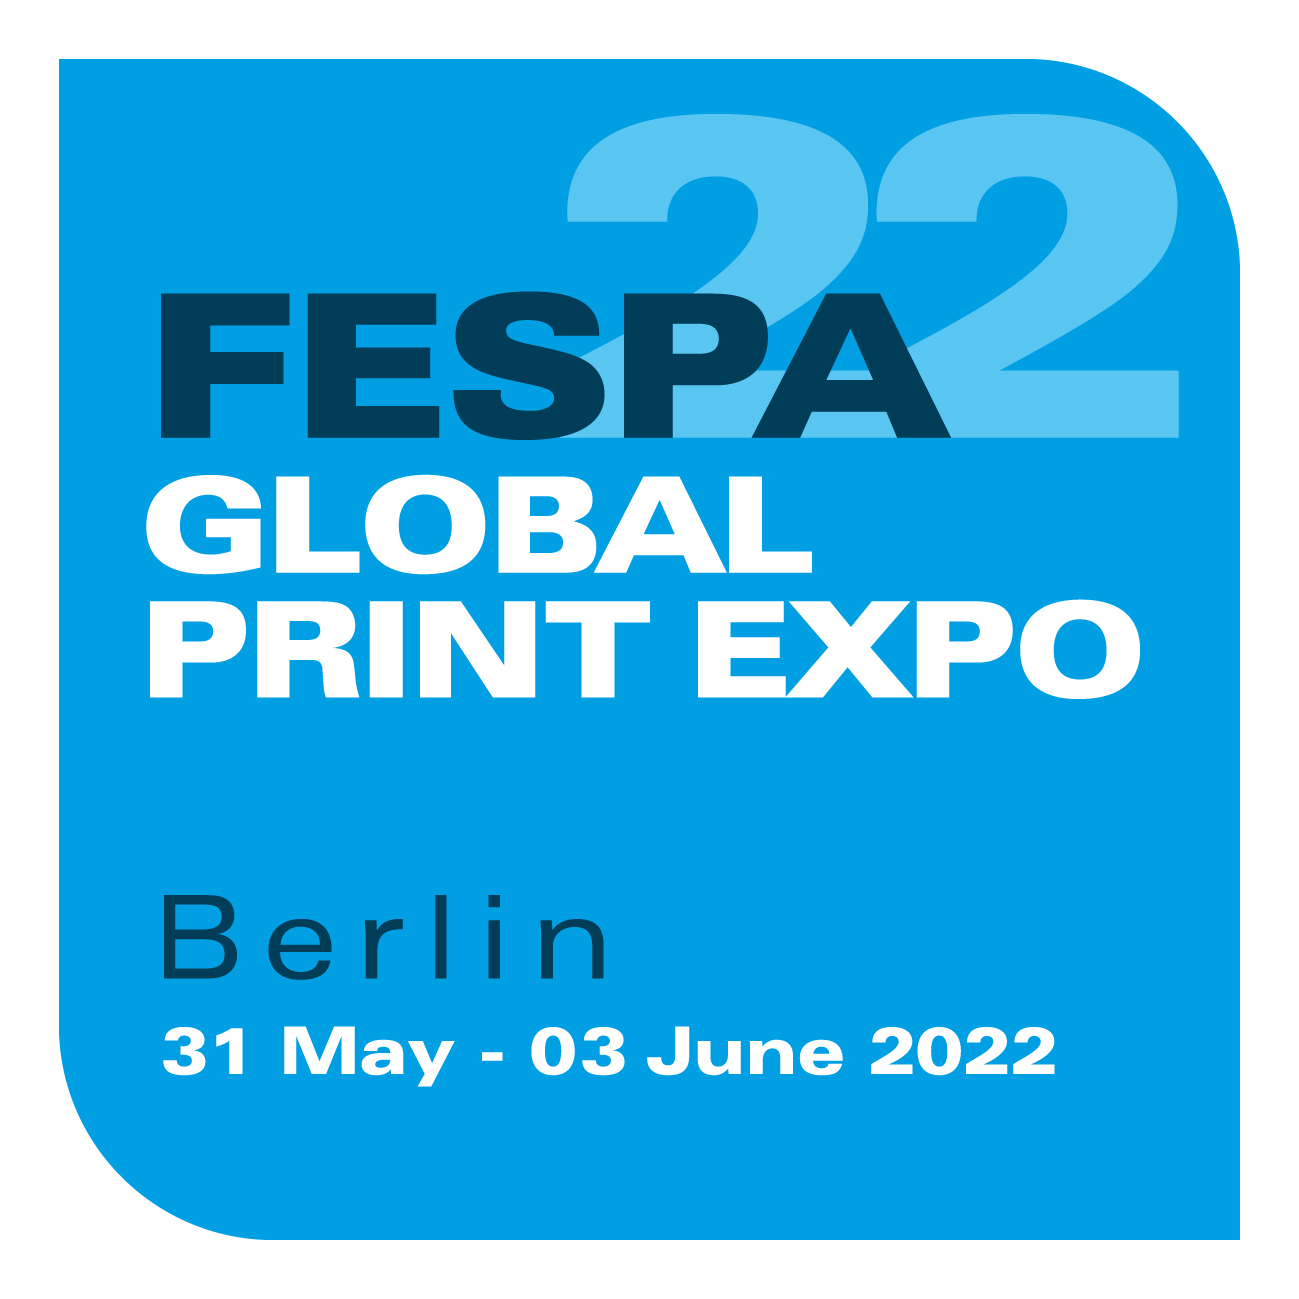 FESPA GLOBAL PRINT EXPO 2021 Full White